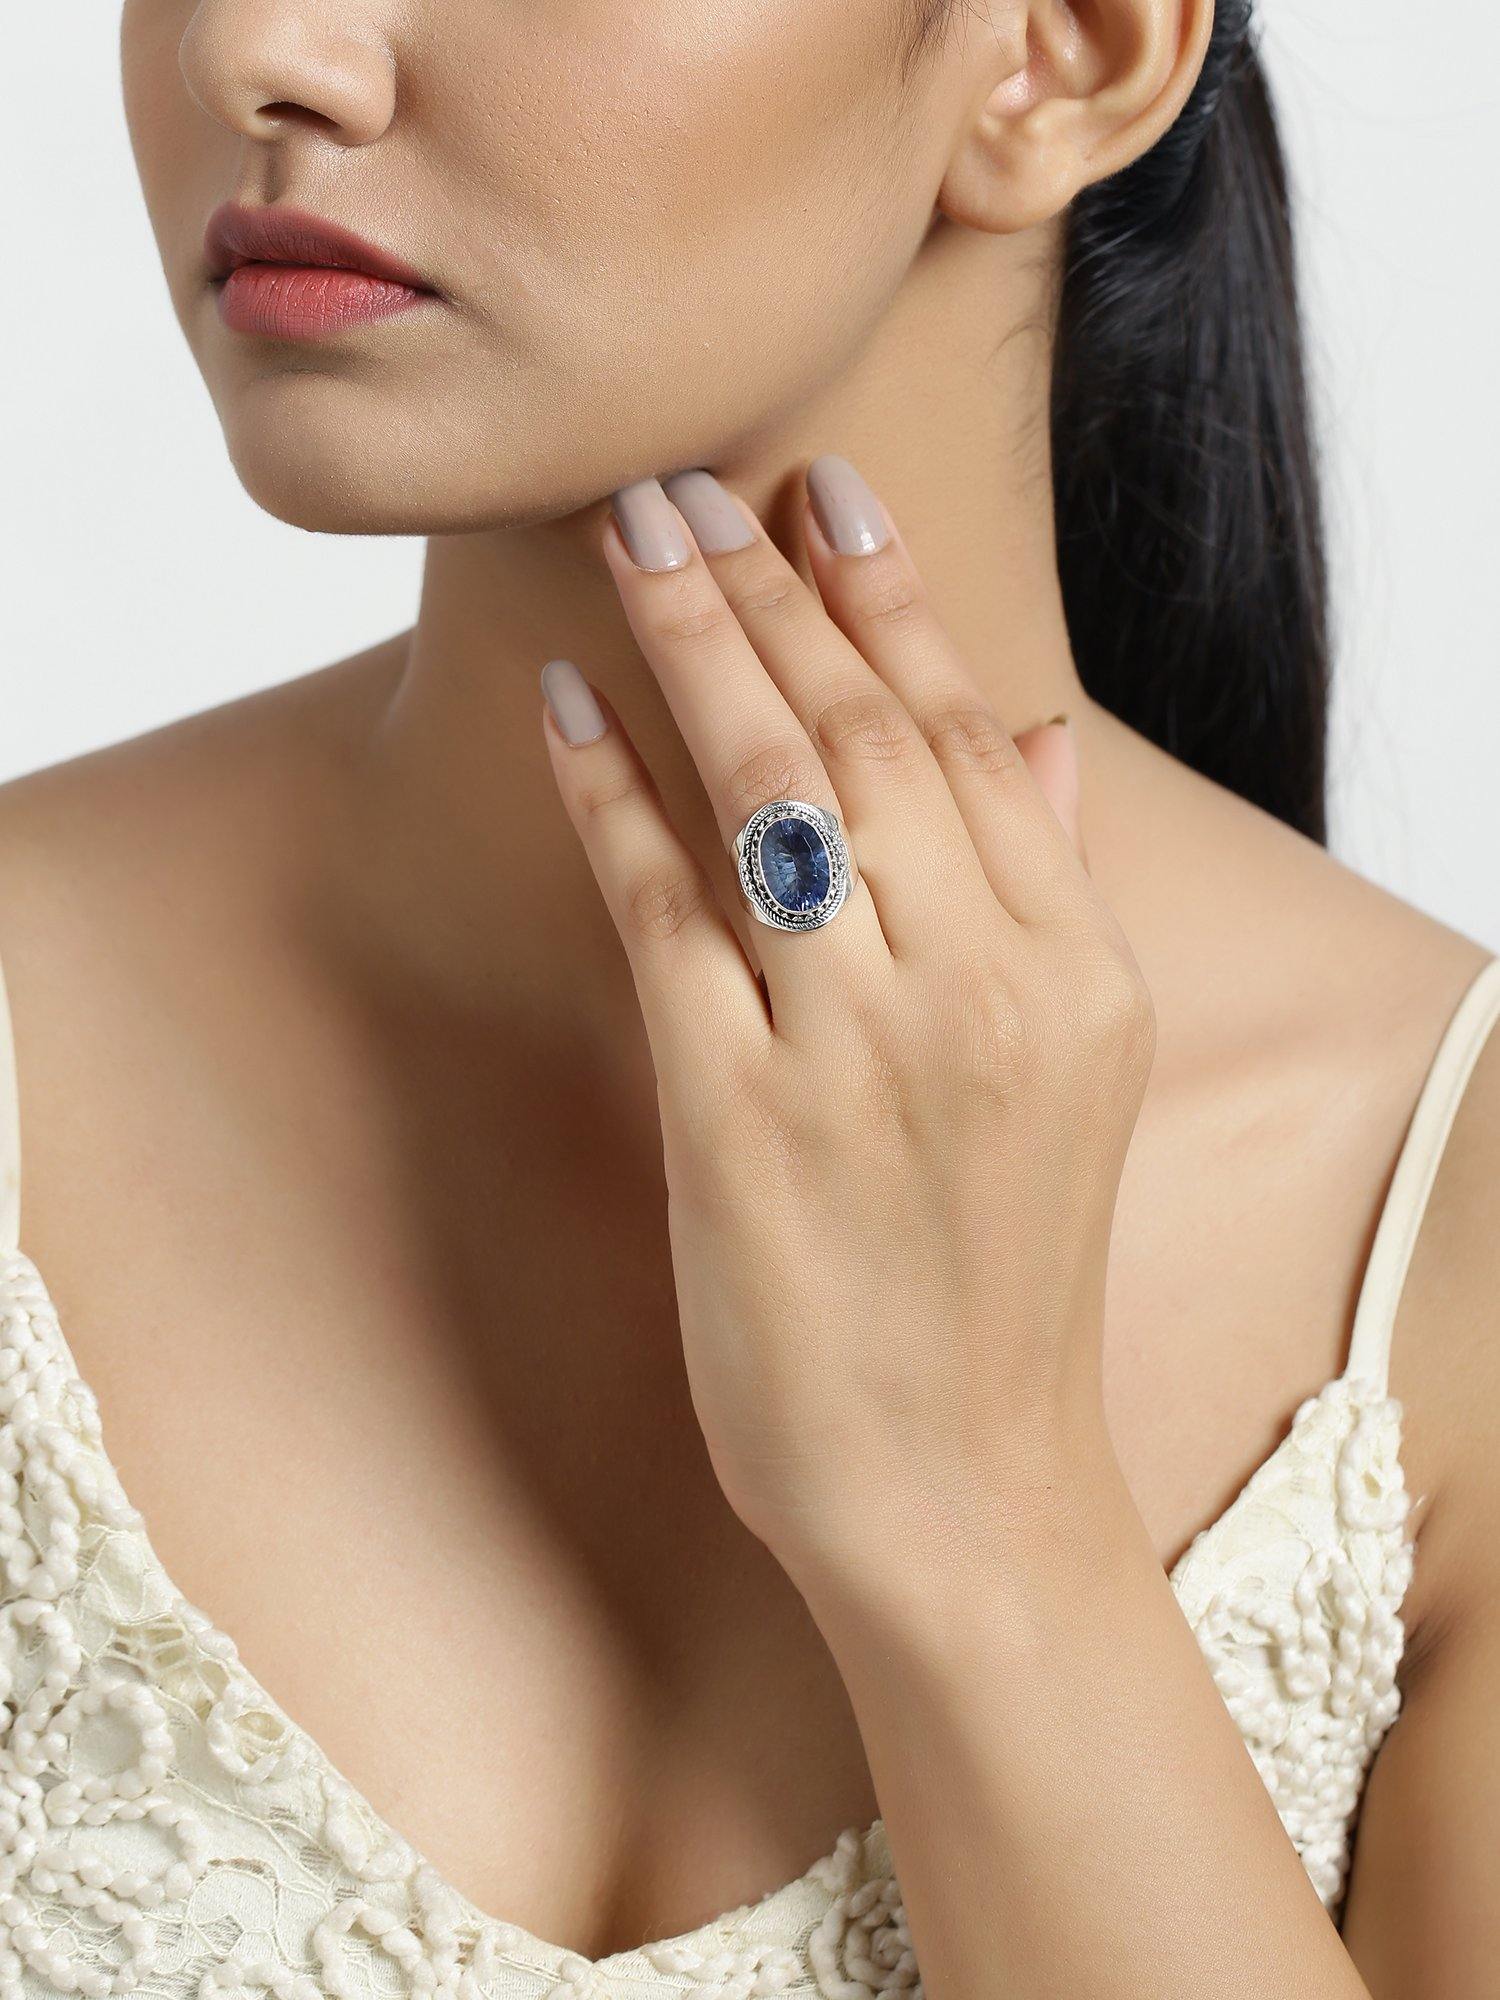 Blue Quartz Solid 925 Sterling Silver Ring Jewelry - YoTreasure